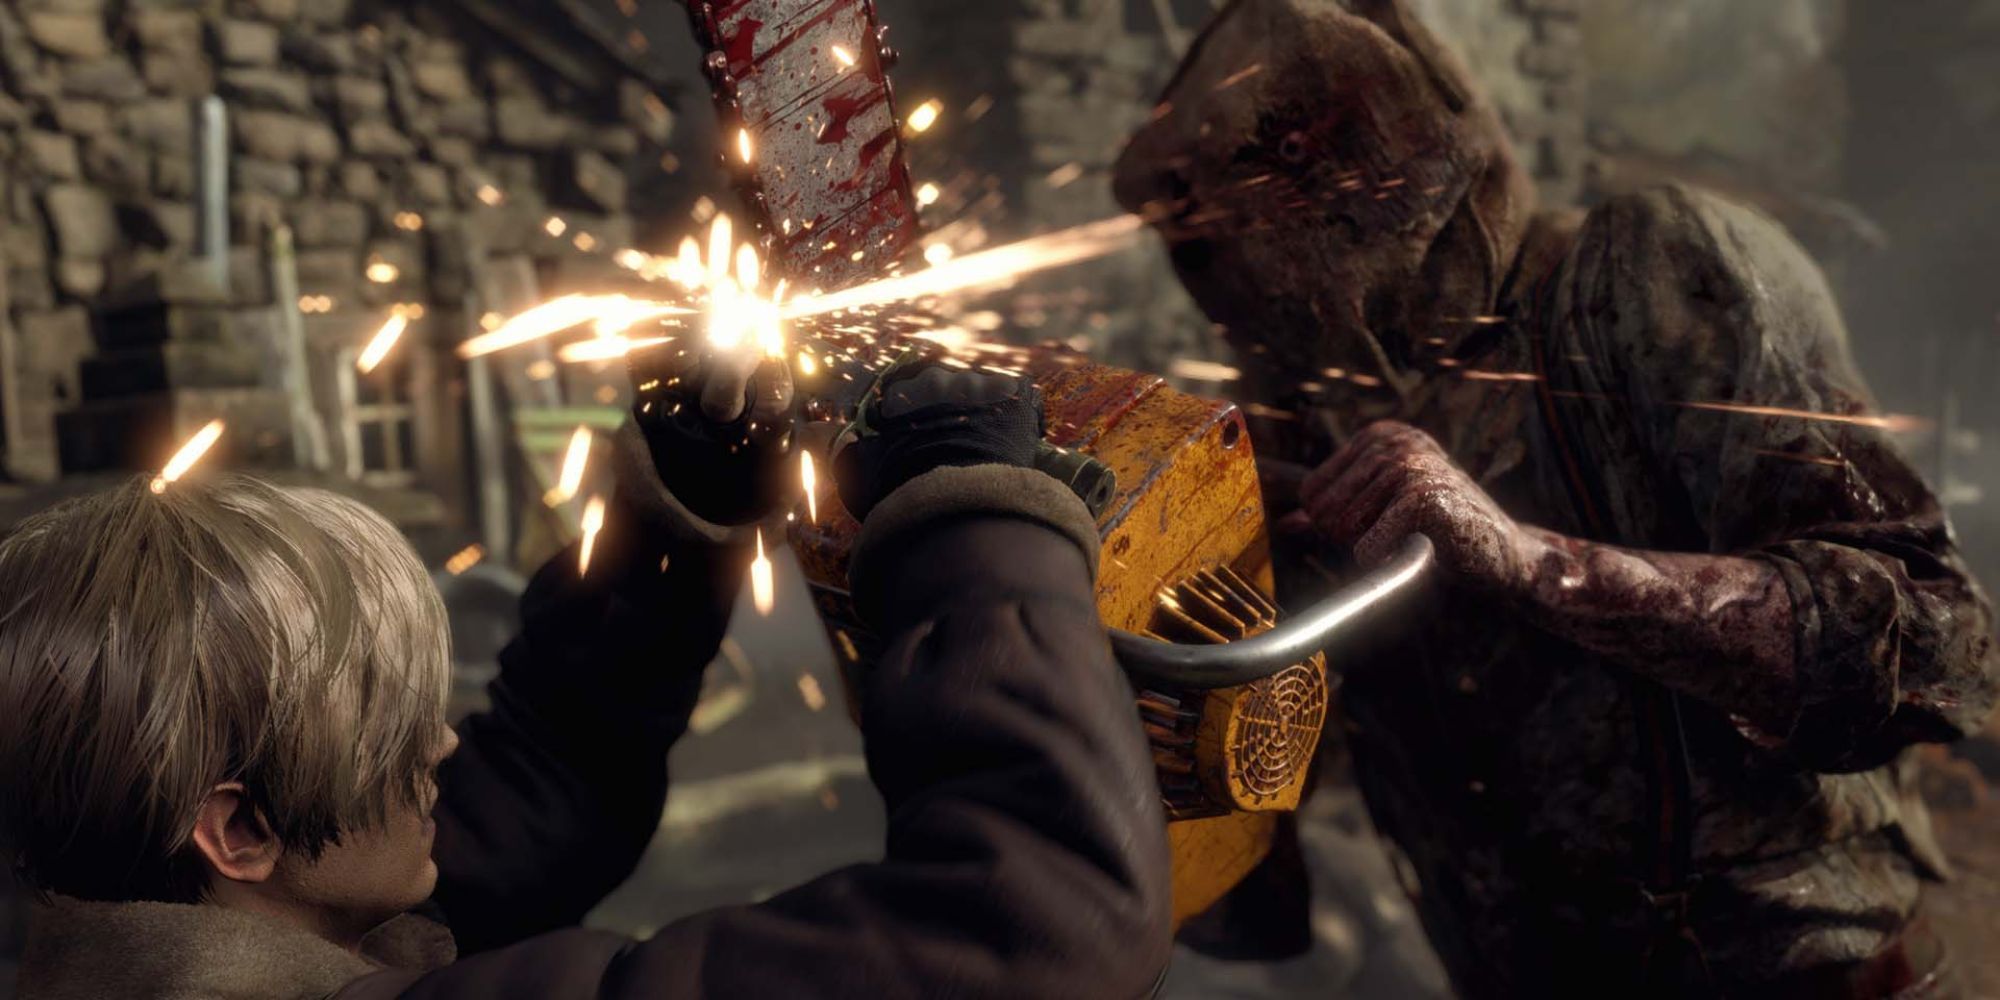 Leon parrying Dr. Salvador in the Resident Evil 4 Remake.